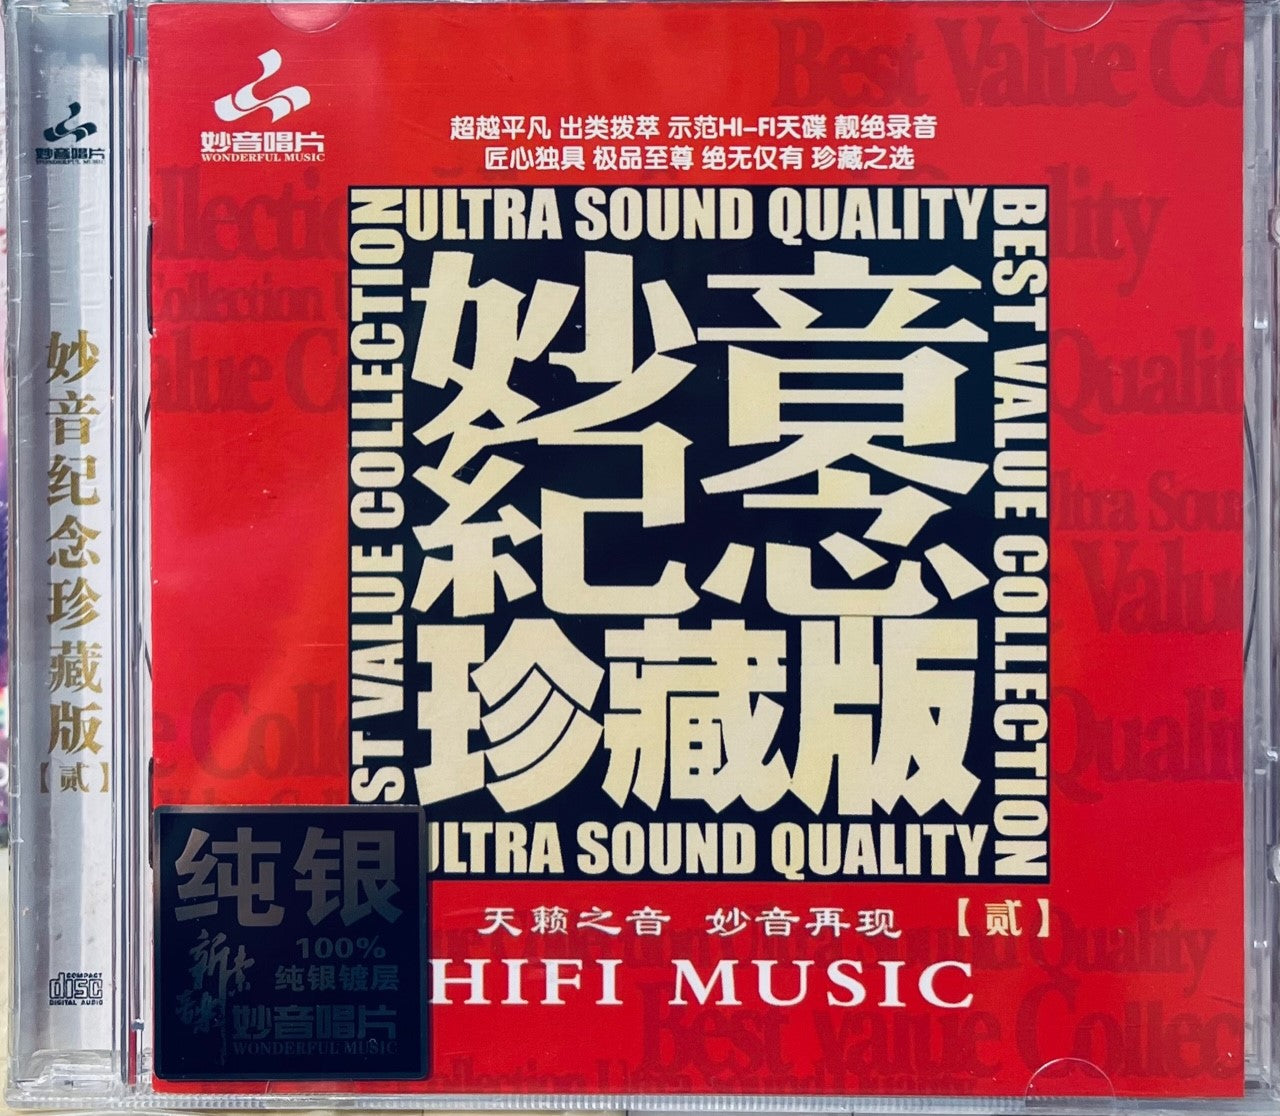 ULTRA SOUND QUALITY BEST VALUE COLLECTION 妙音纪念珍藏版2 (SILVER) CD